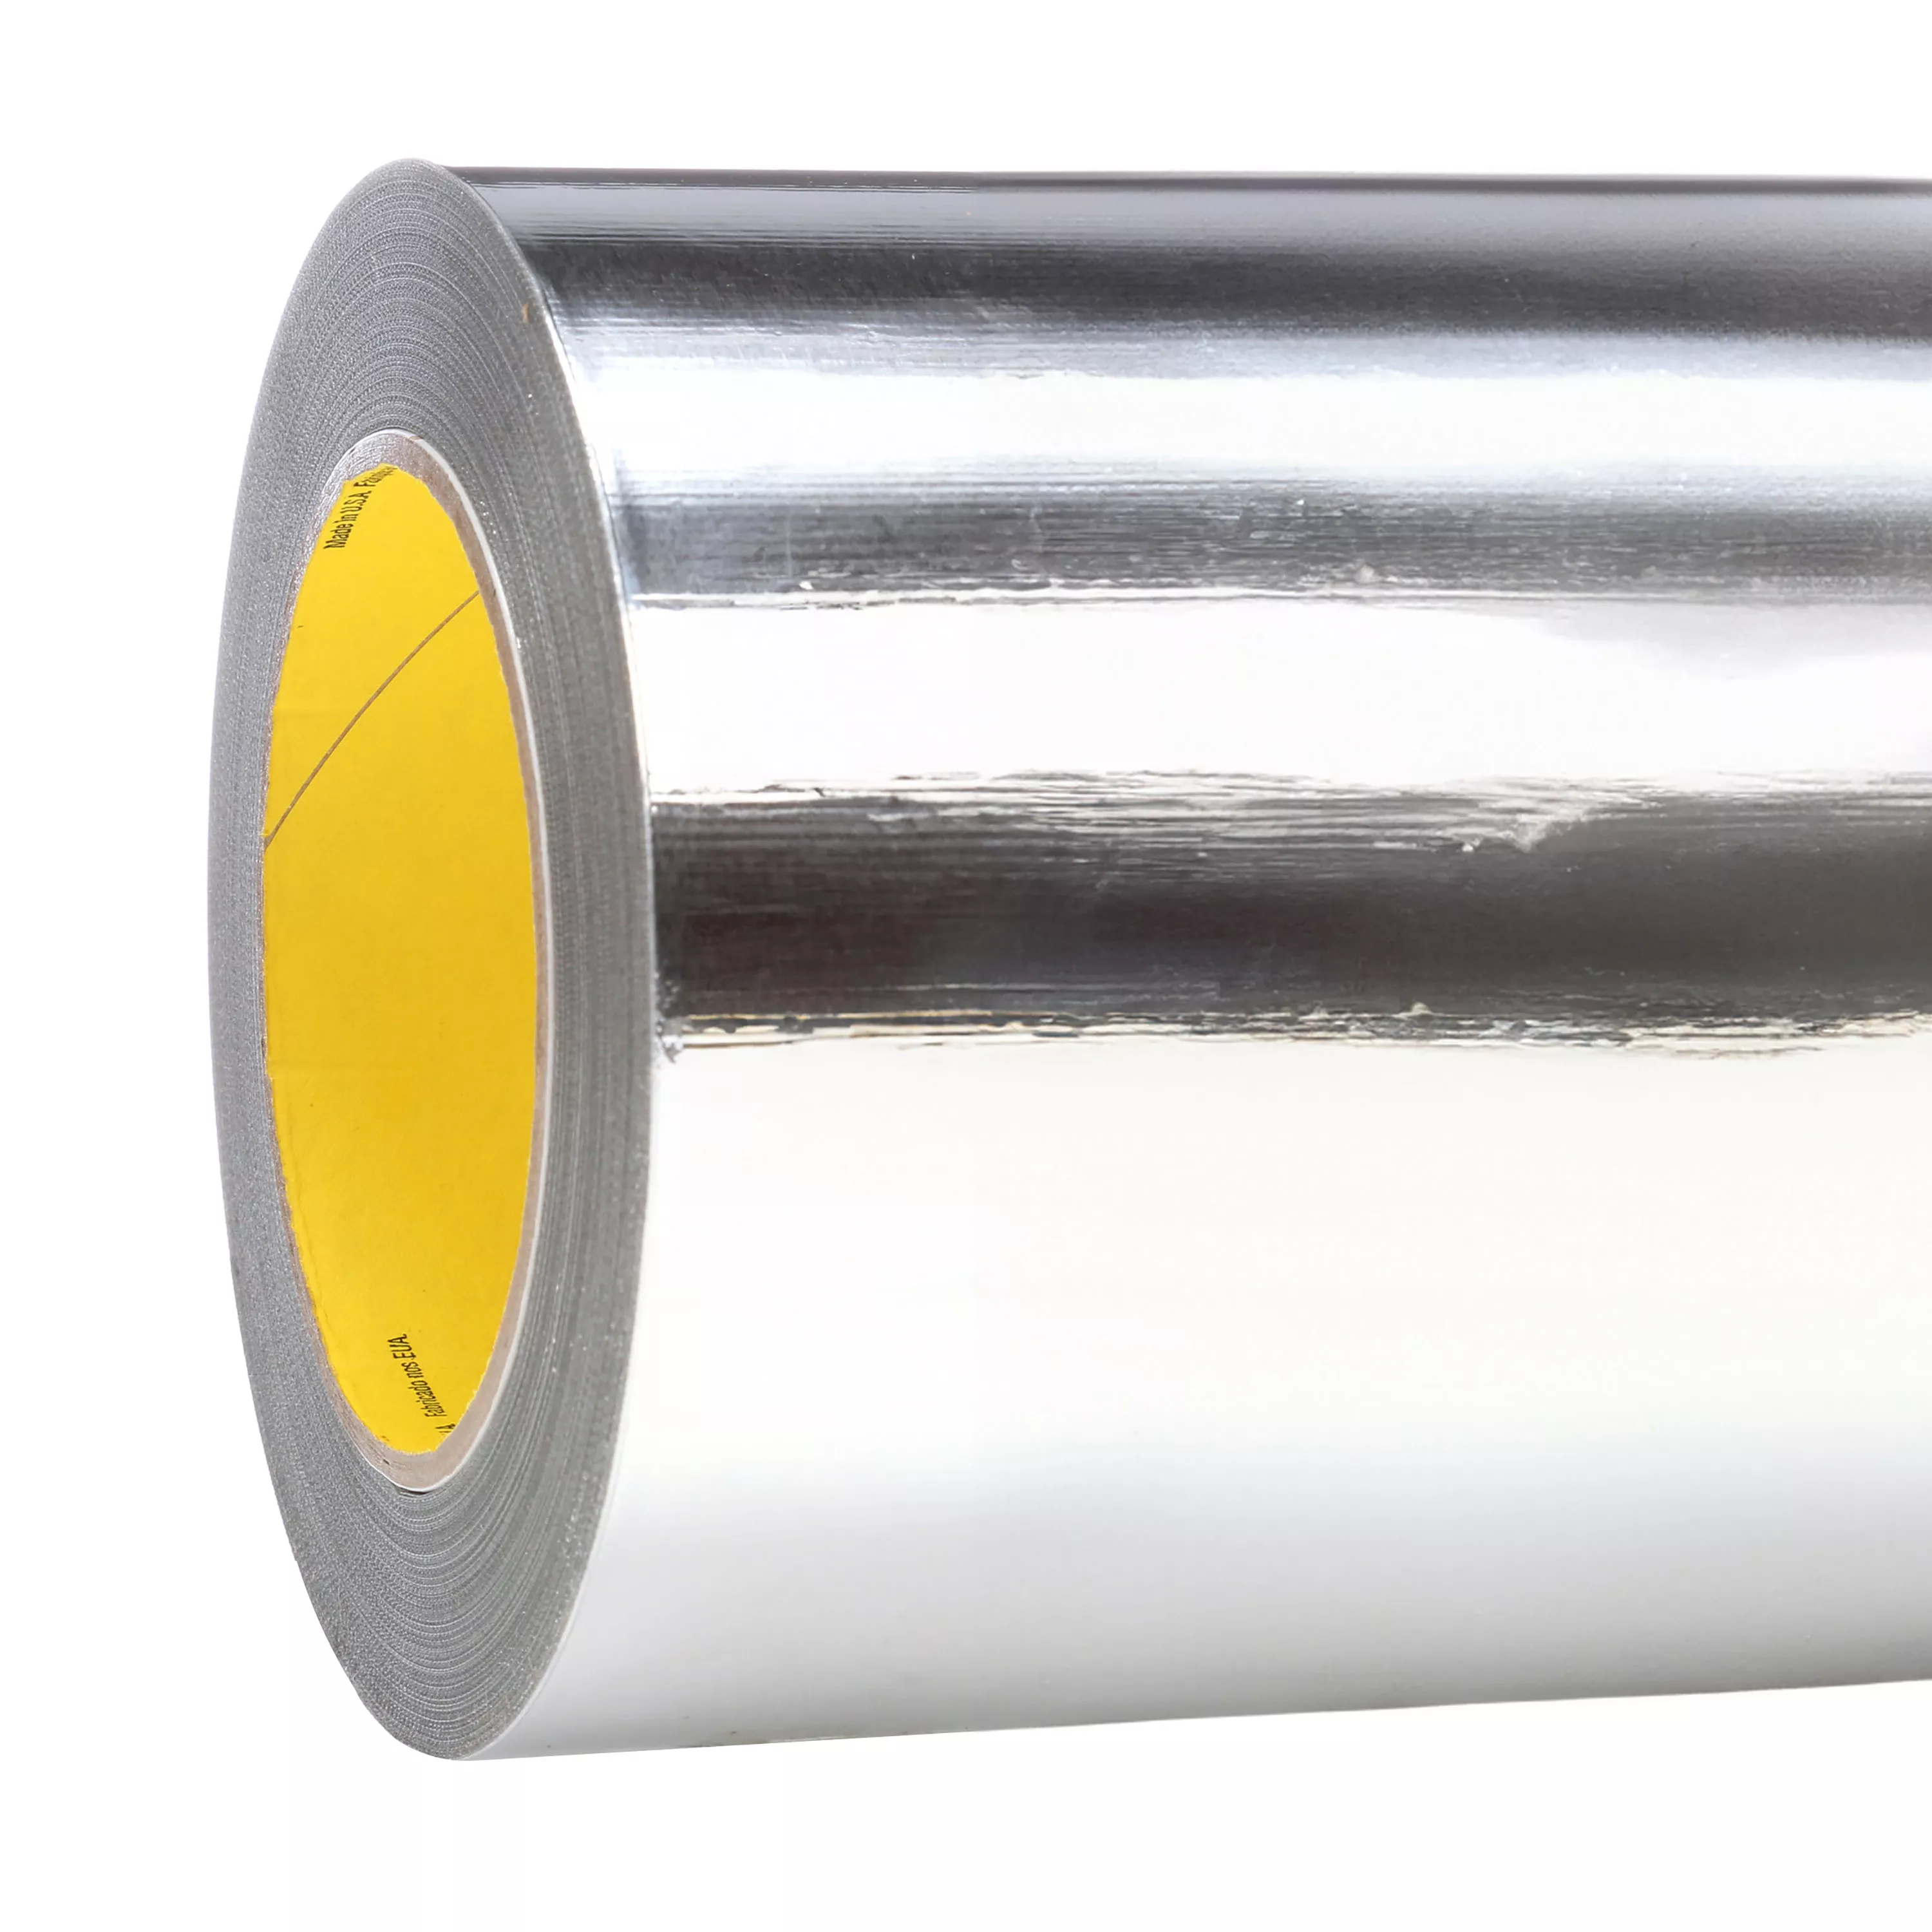 3M™ High Temperature Aluminum Foil Glass Cloth Tape 363, Silver, 18 in x
36 yd, 7.3 mil, 1 Roll/Case